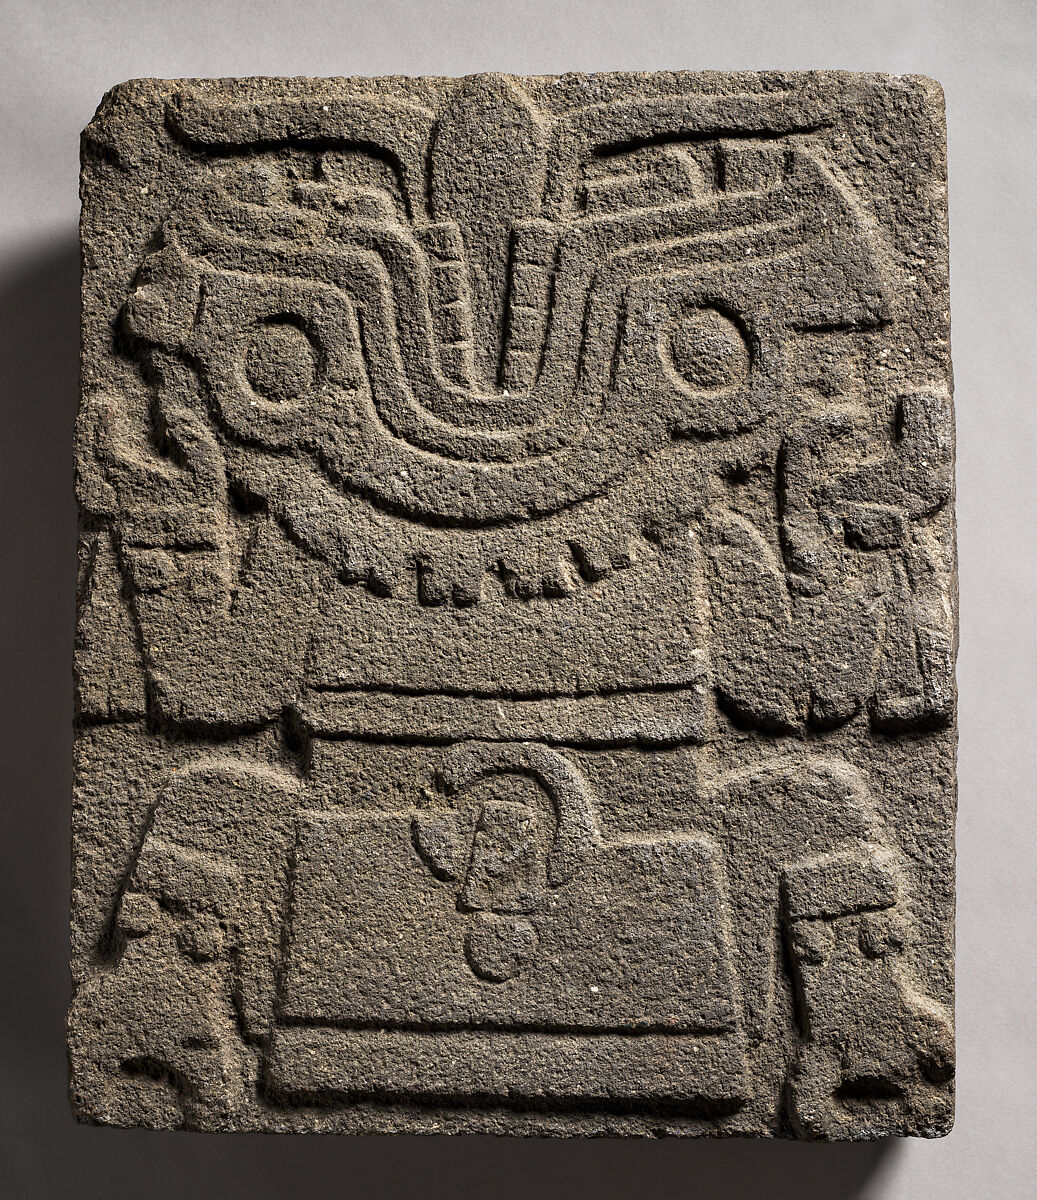 Earth Monster (Tlaltecuhtli), Stone, Aztec 